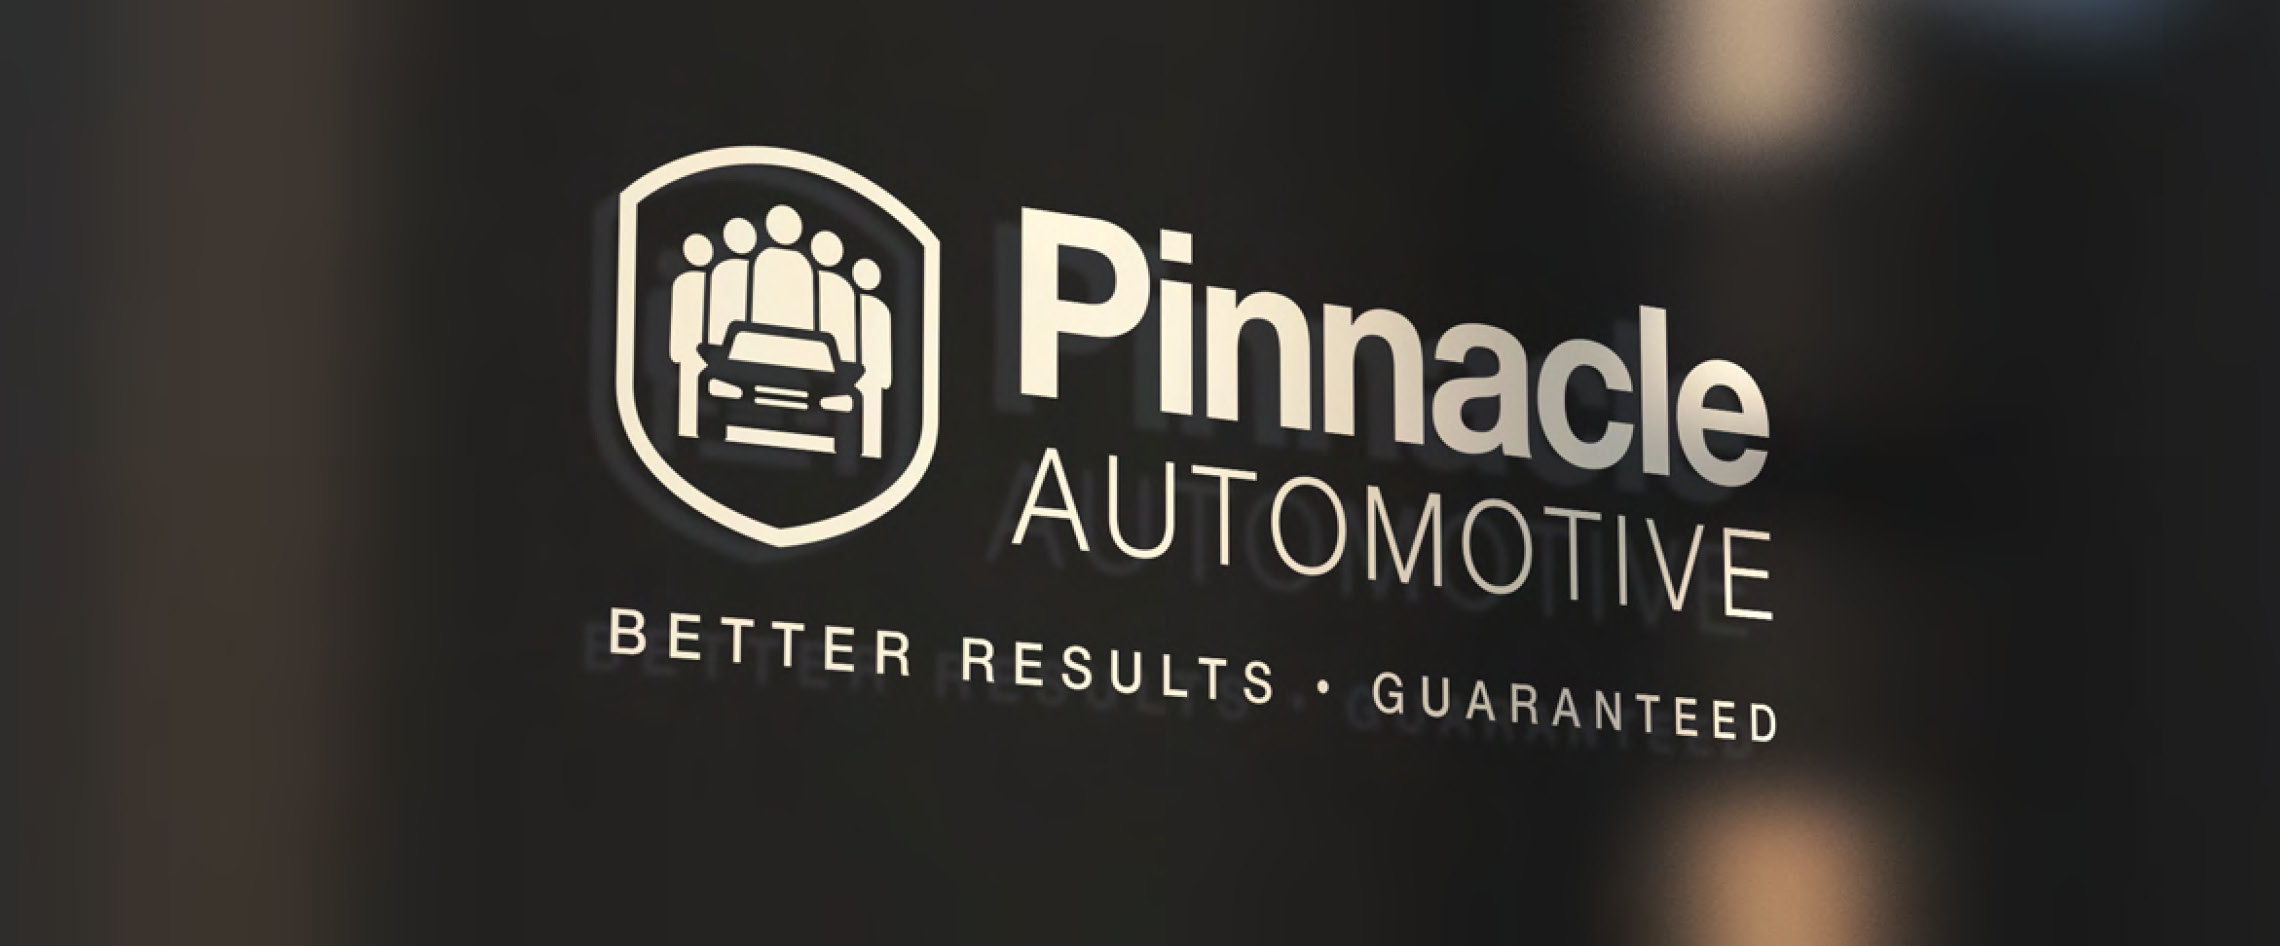 Pinnacle Automotive logo